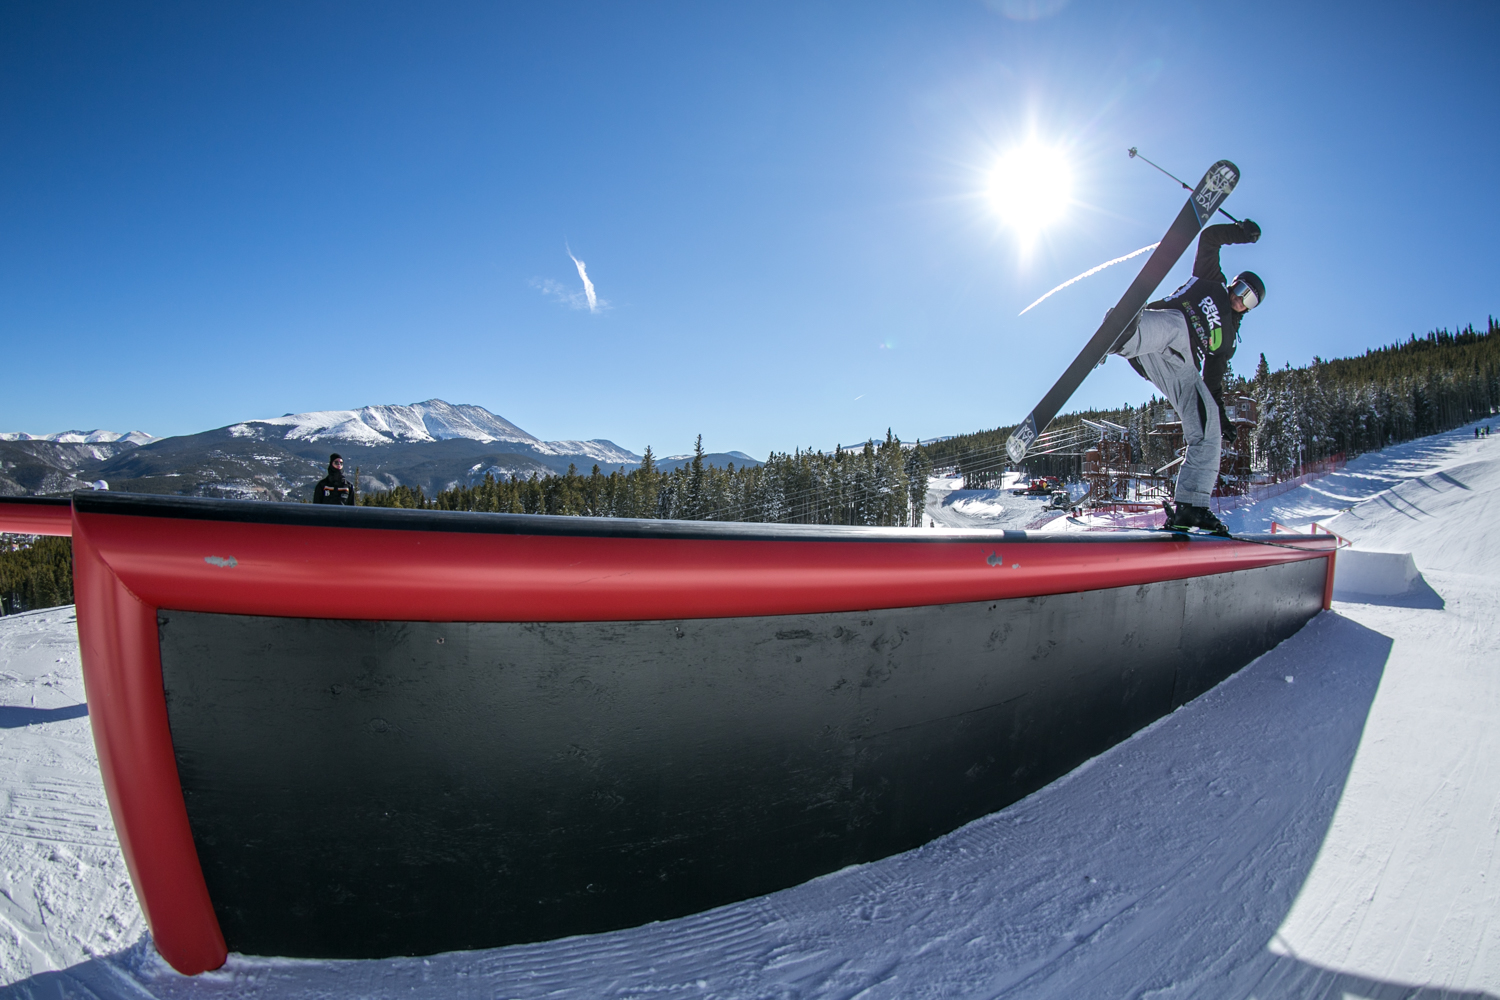 Quinn Wolferman 14 crisp captures ski